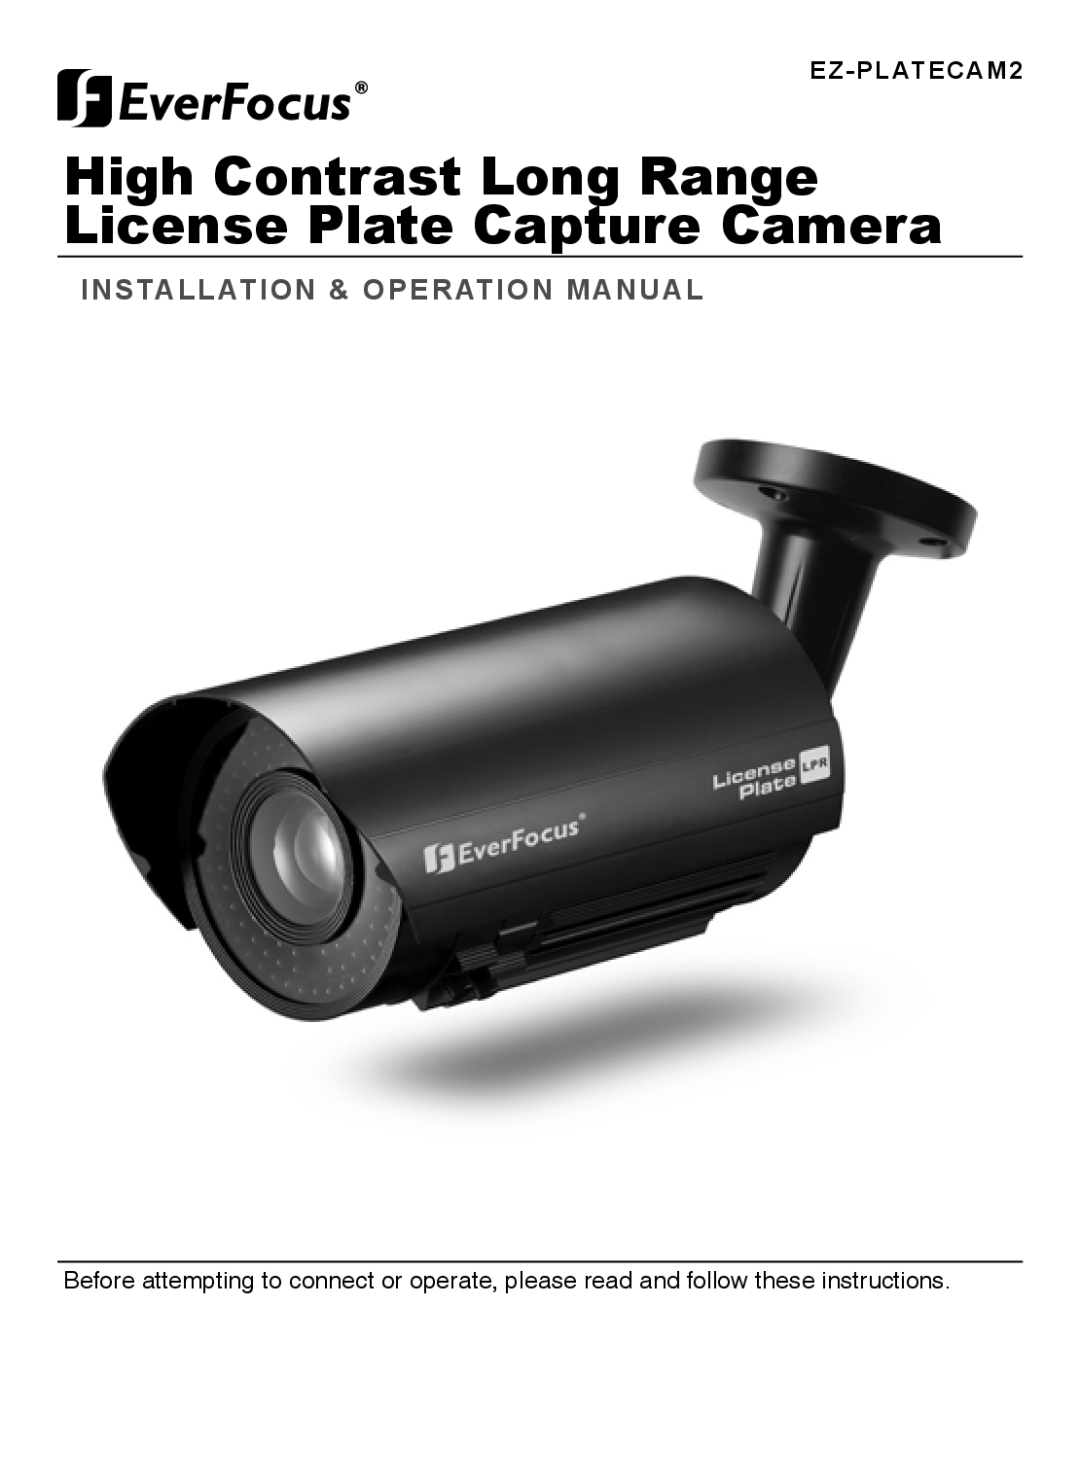 EverFocus EZ-PLATECAM2 operation manual High Contrast Long Range License Plate Capture Camera 